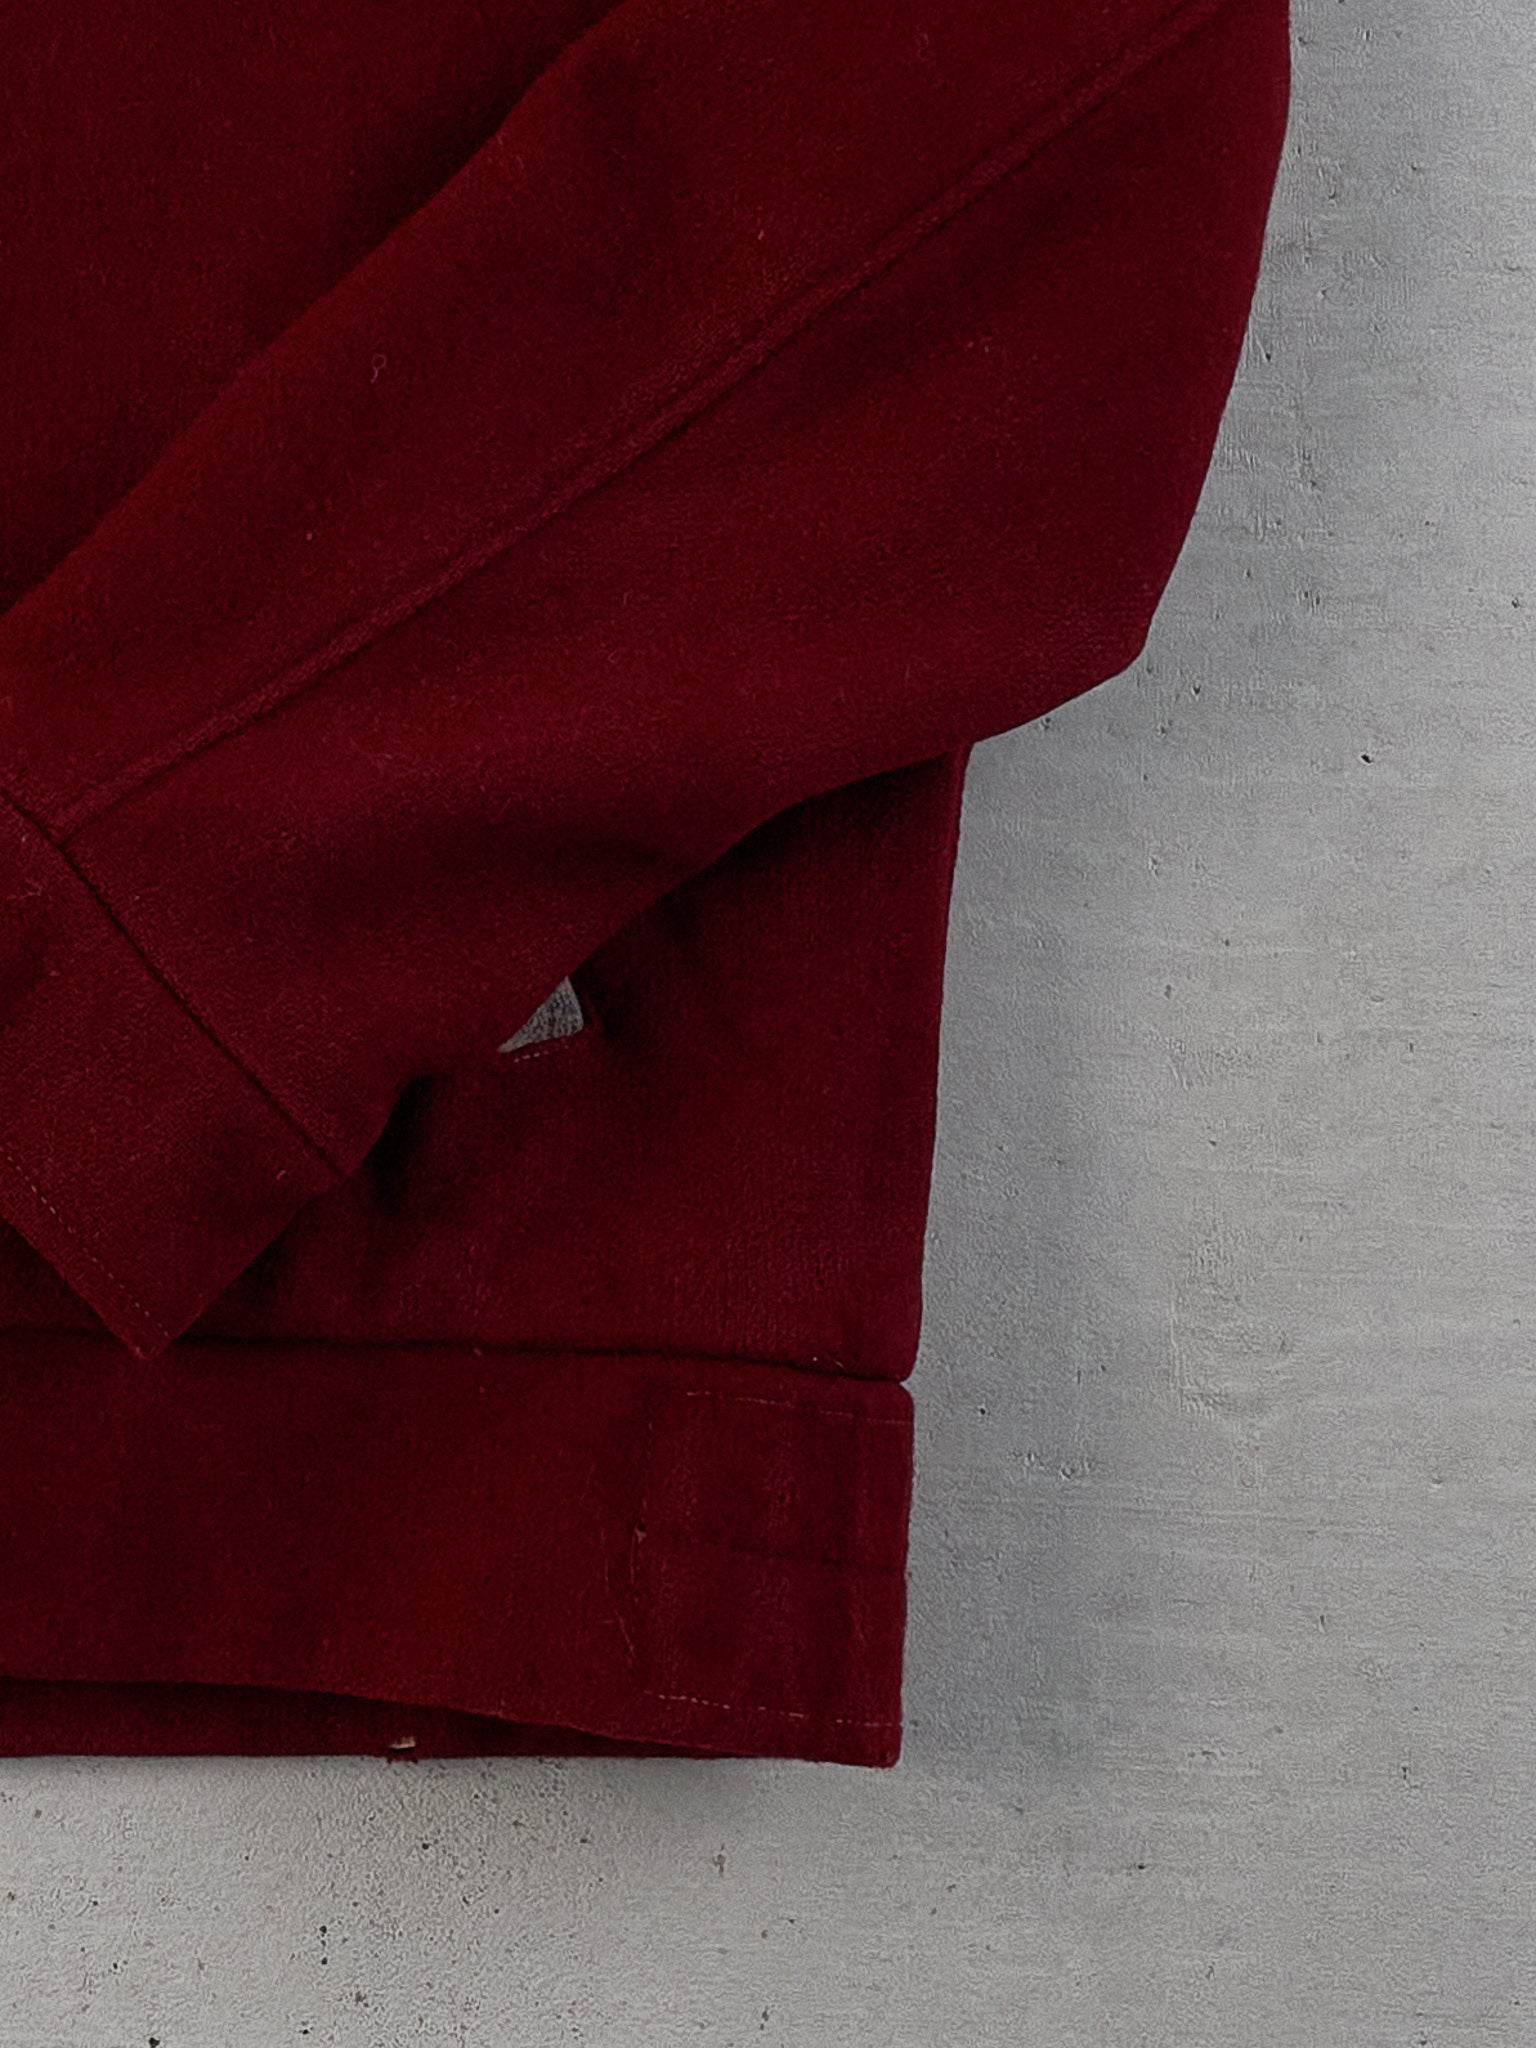 Vintage 71' Maroon Red Mc Master University Collared Jacket (M)